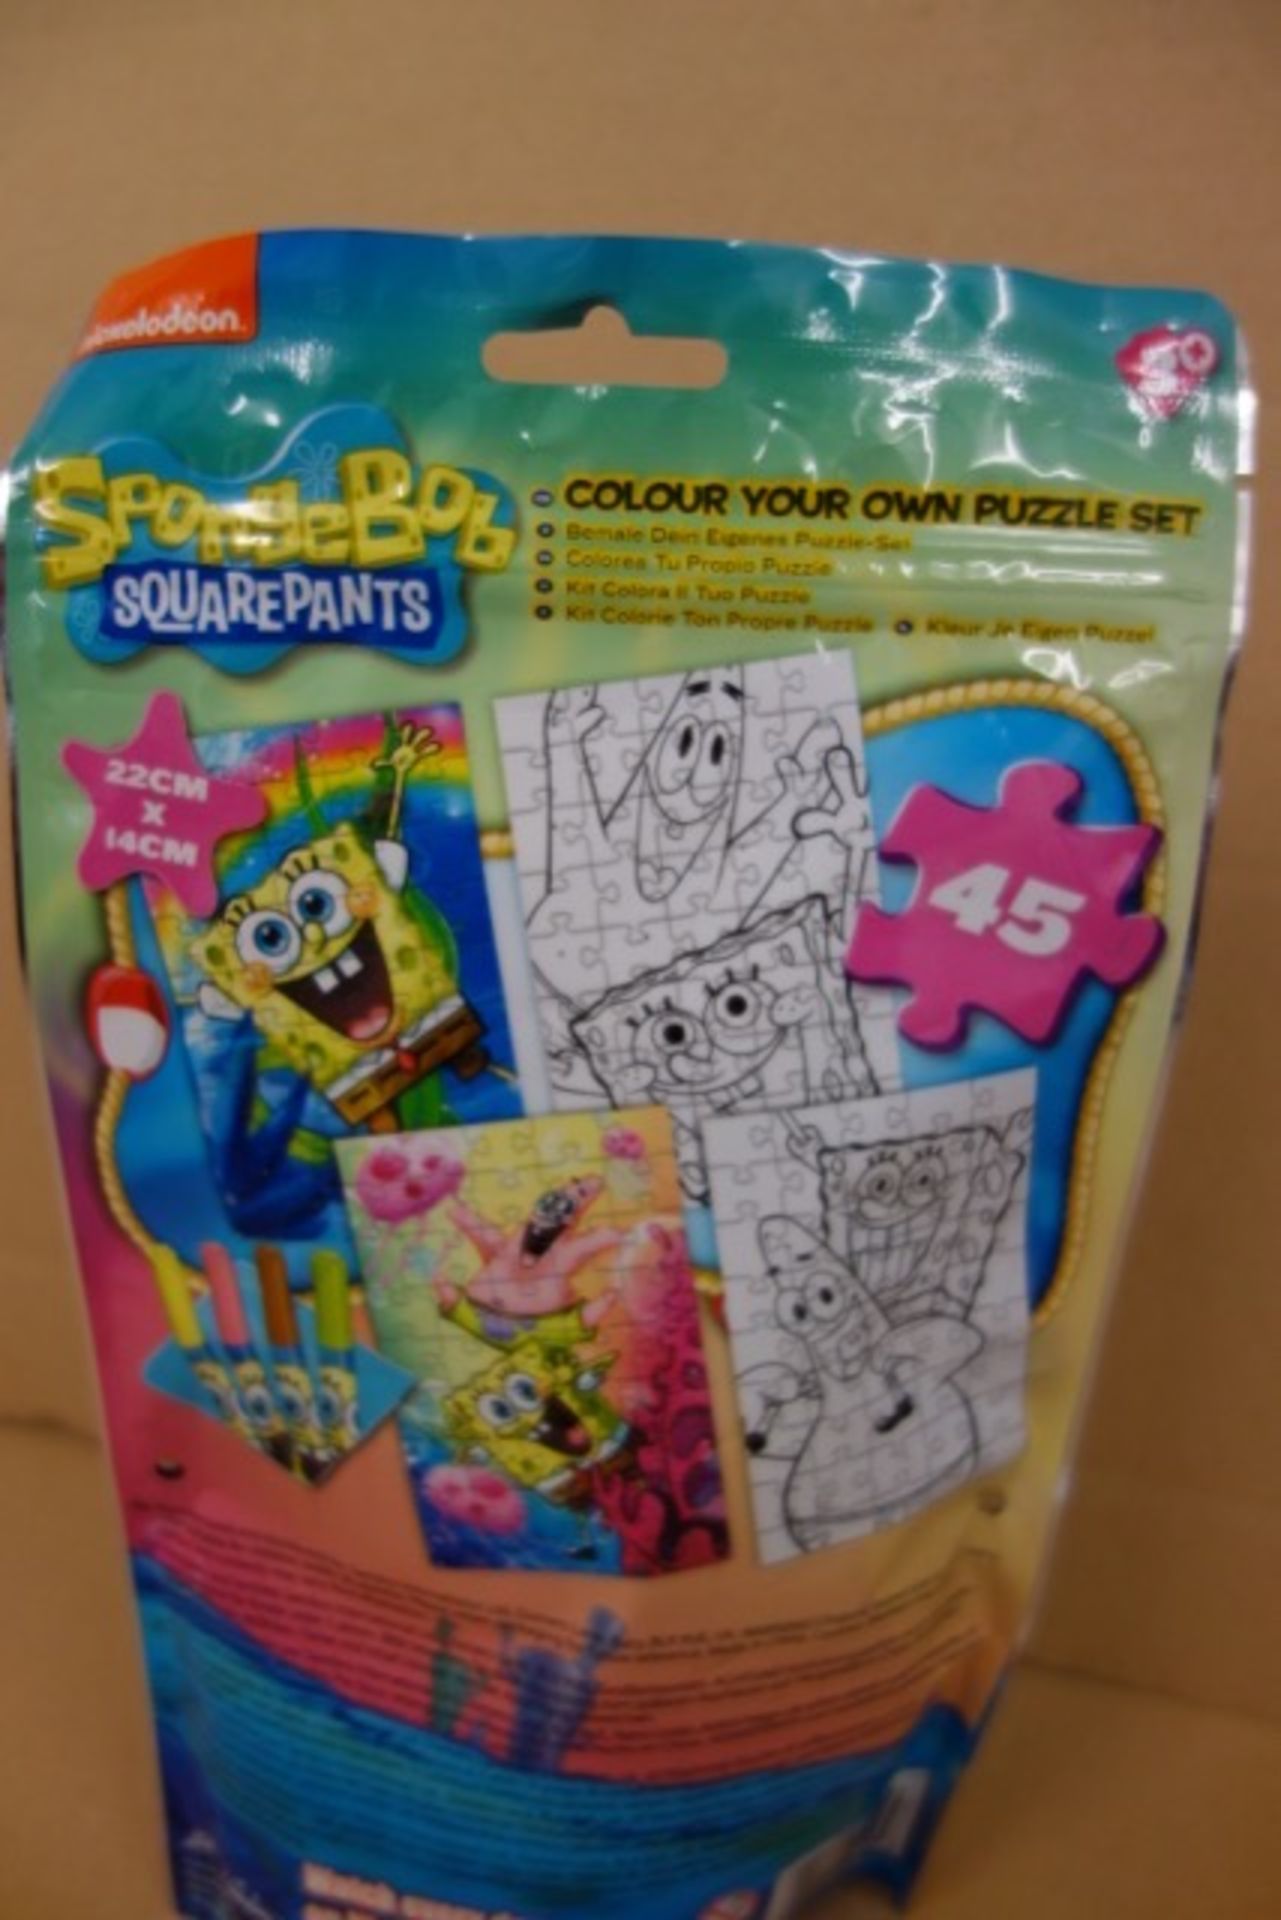 Pallet to contain 840 x Brand New Spongebob Squarepants Colour Your Own Puzzle Set. - Image 2 of 2